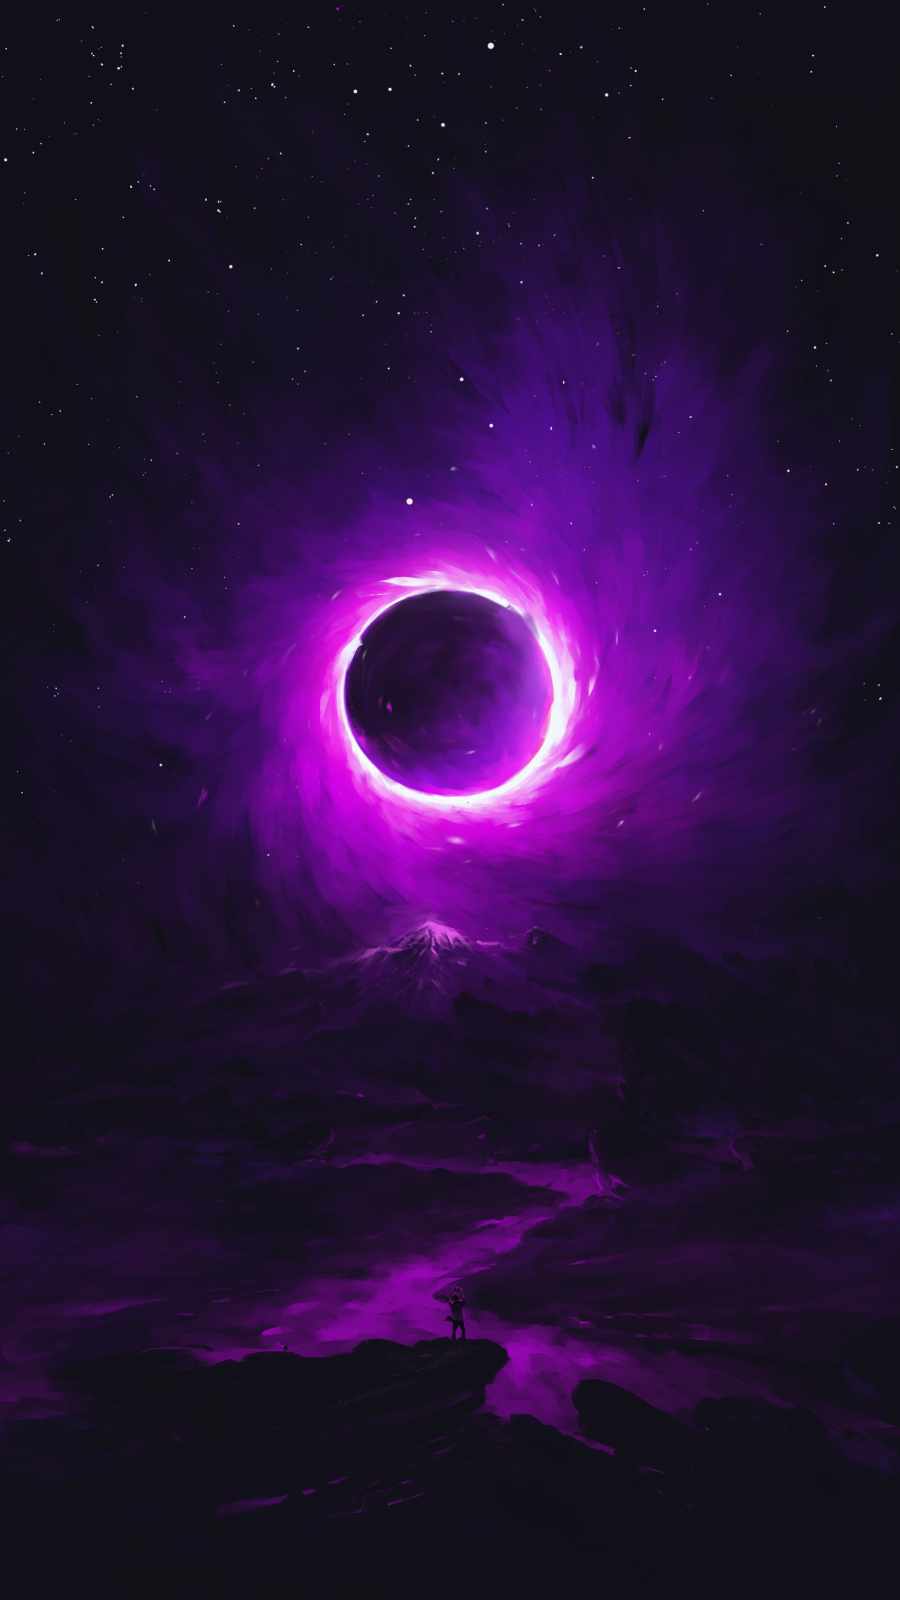 Eclipse Night iPhone Wallpaper HD